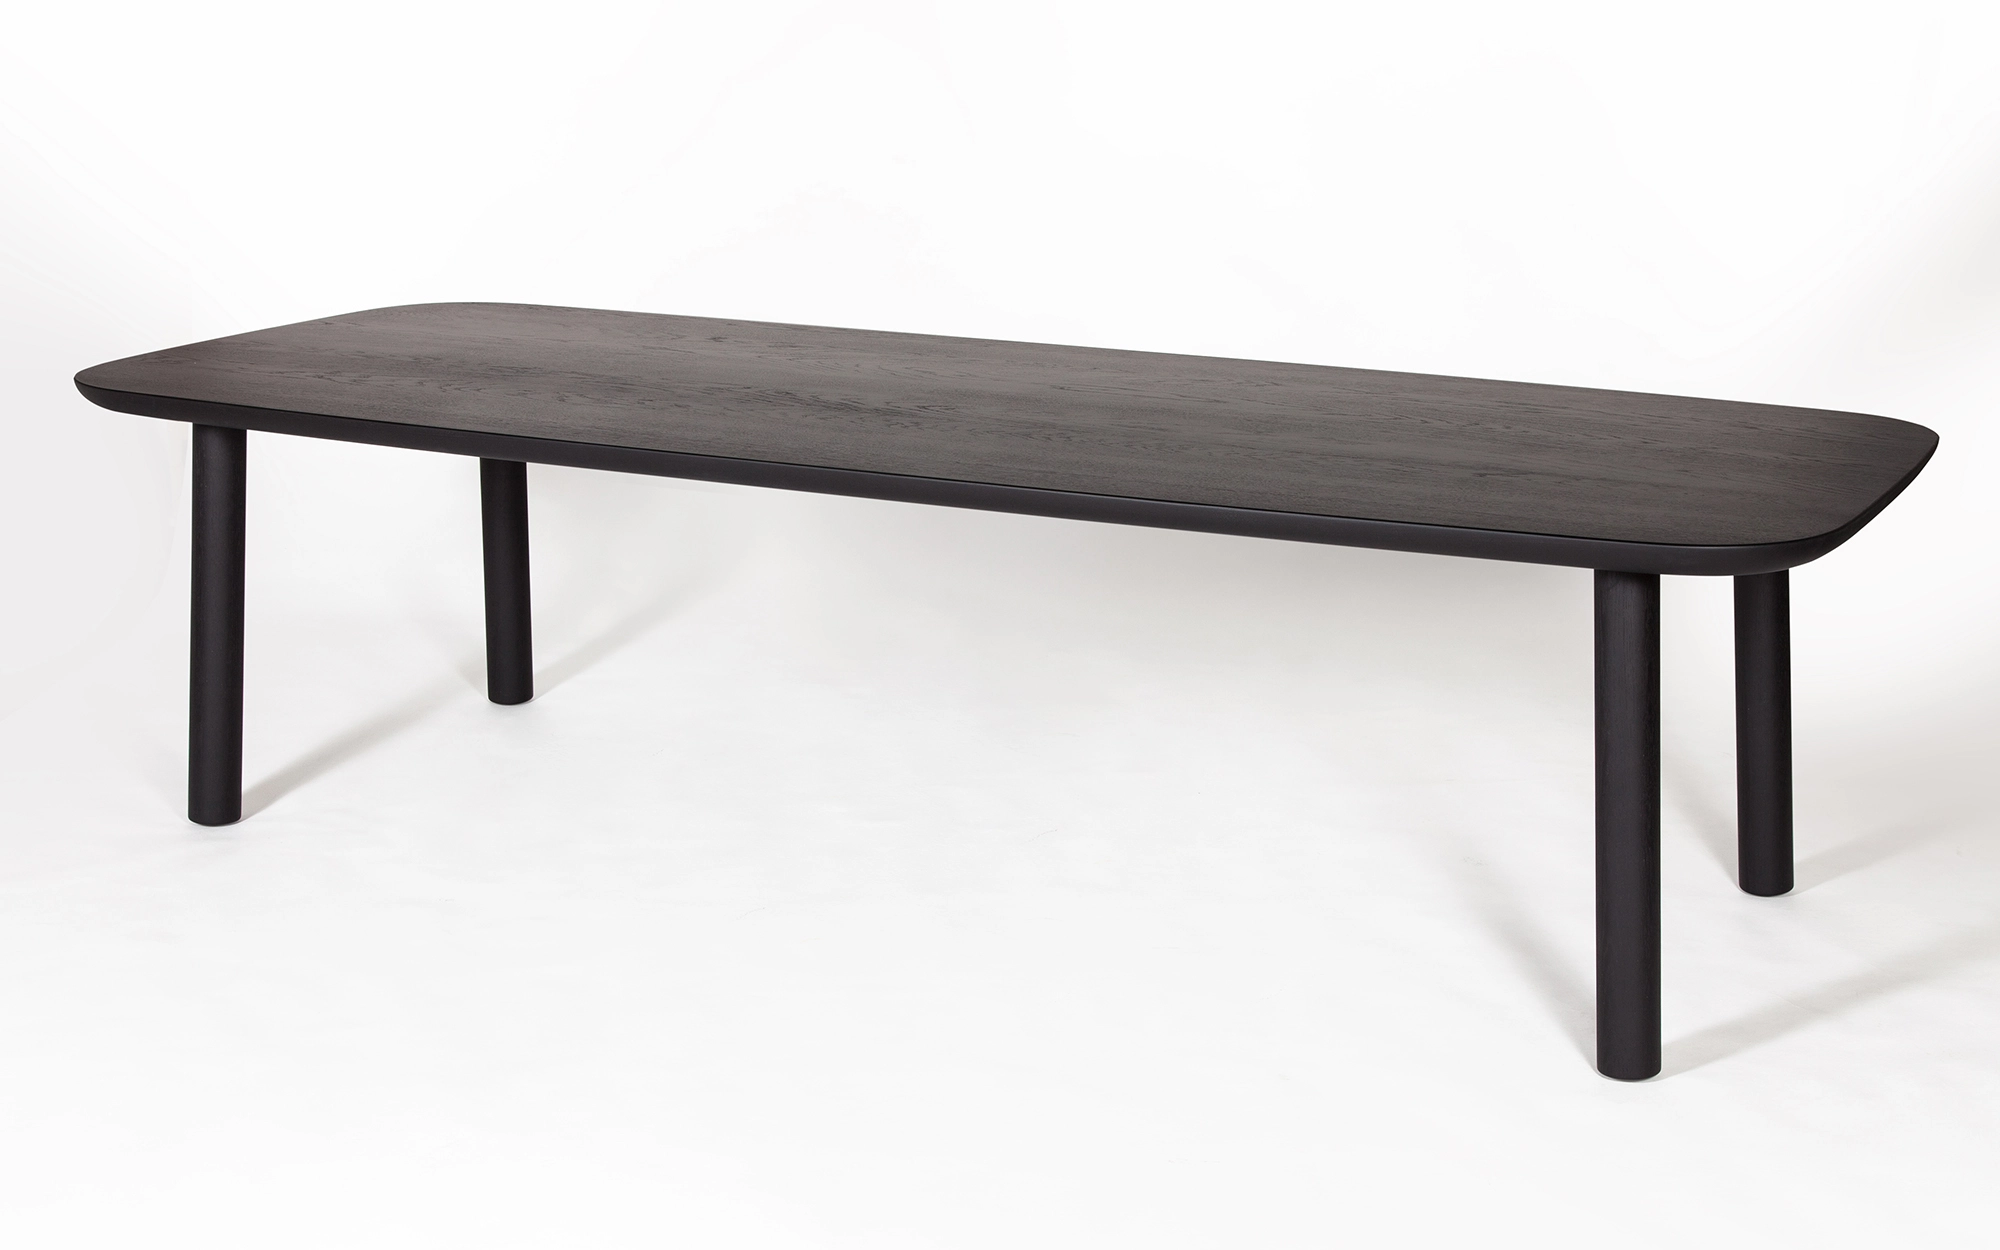 TOOW4L Table - Jasper Morrison - Stool - Galerie kreo